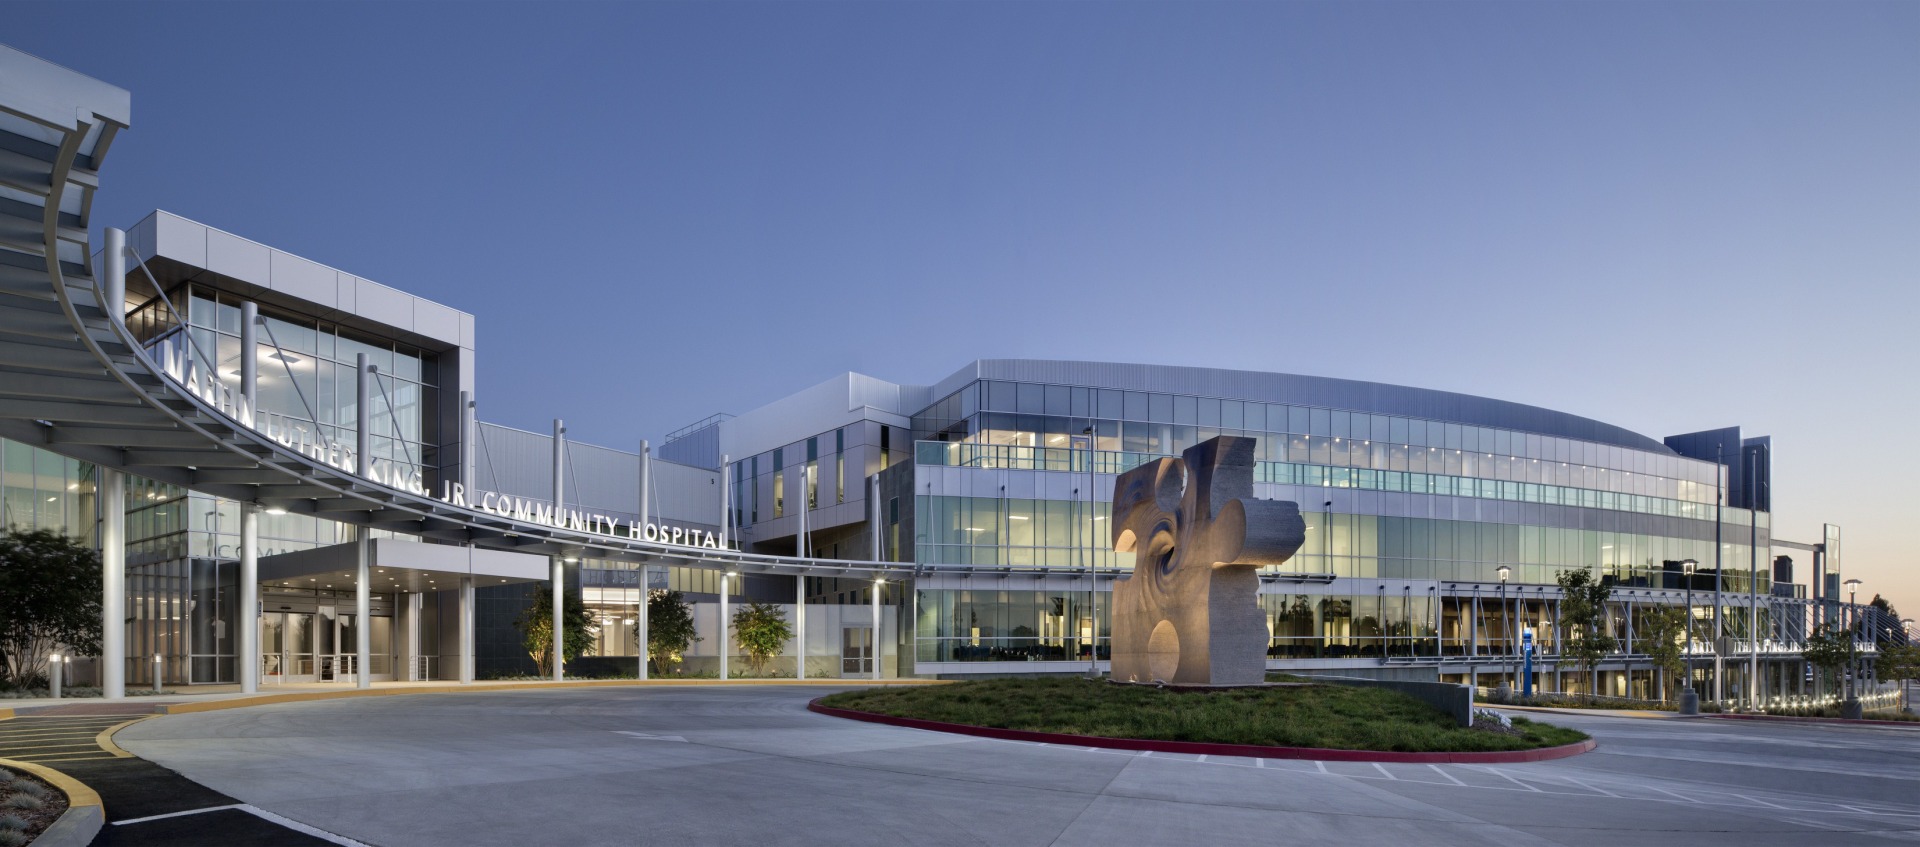 MLK-Community-Hospital-HMC-Architects1